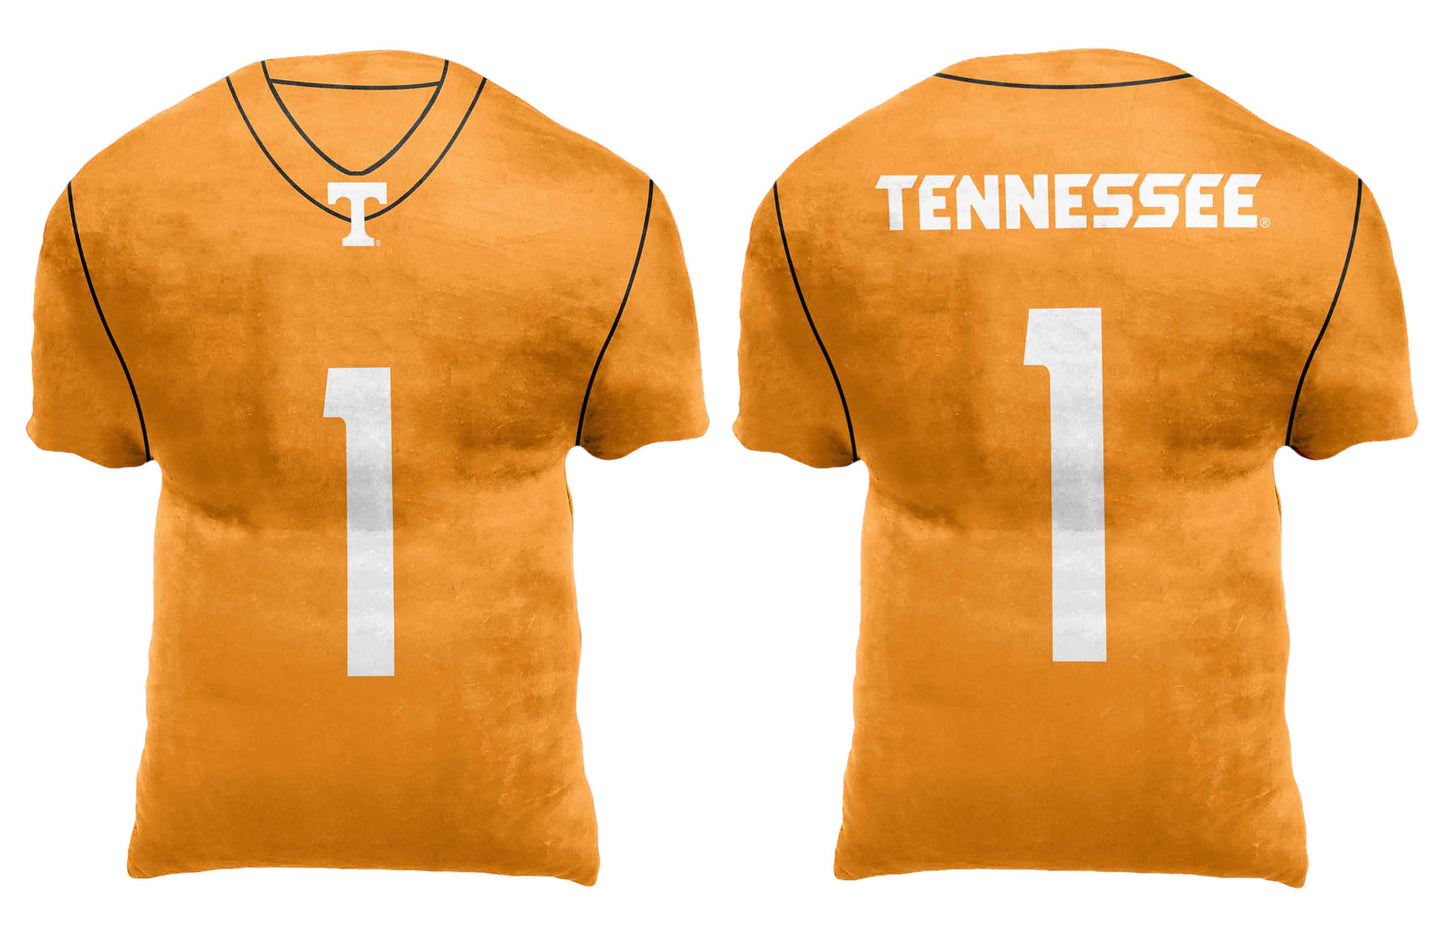 Tennessee Volunteers NCAA Jersey Cloud Pillow - Orange